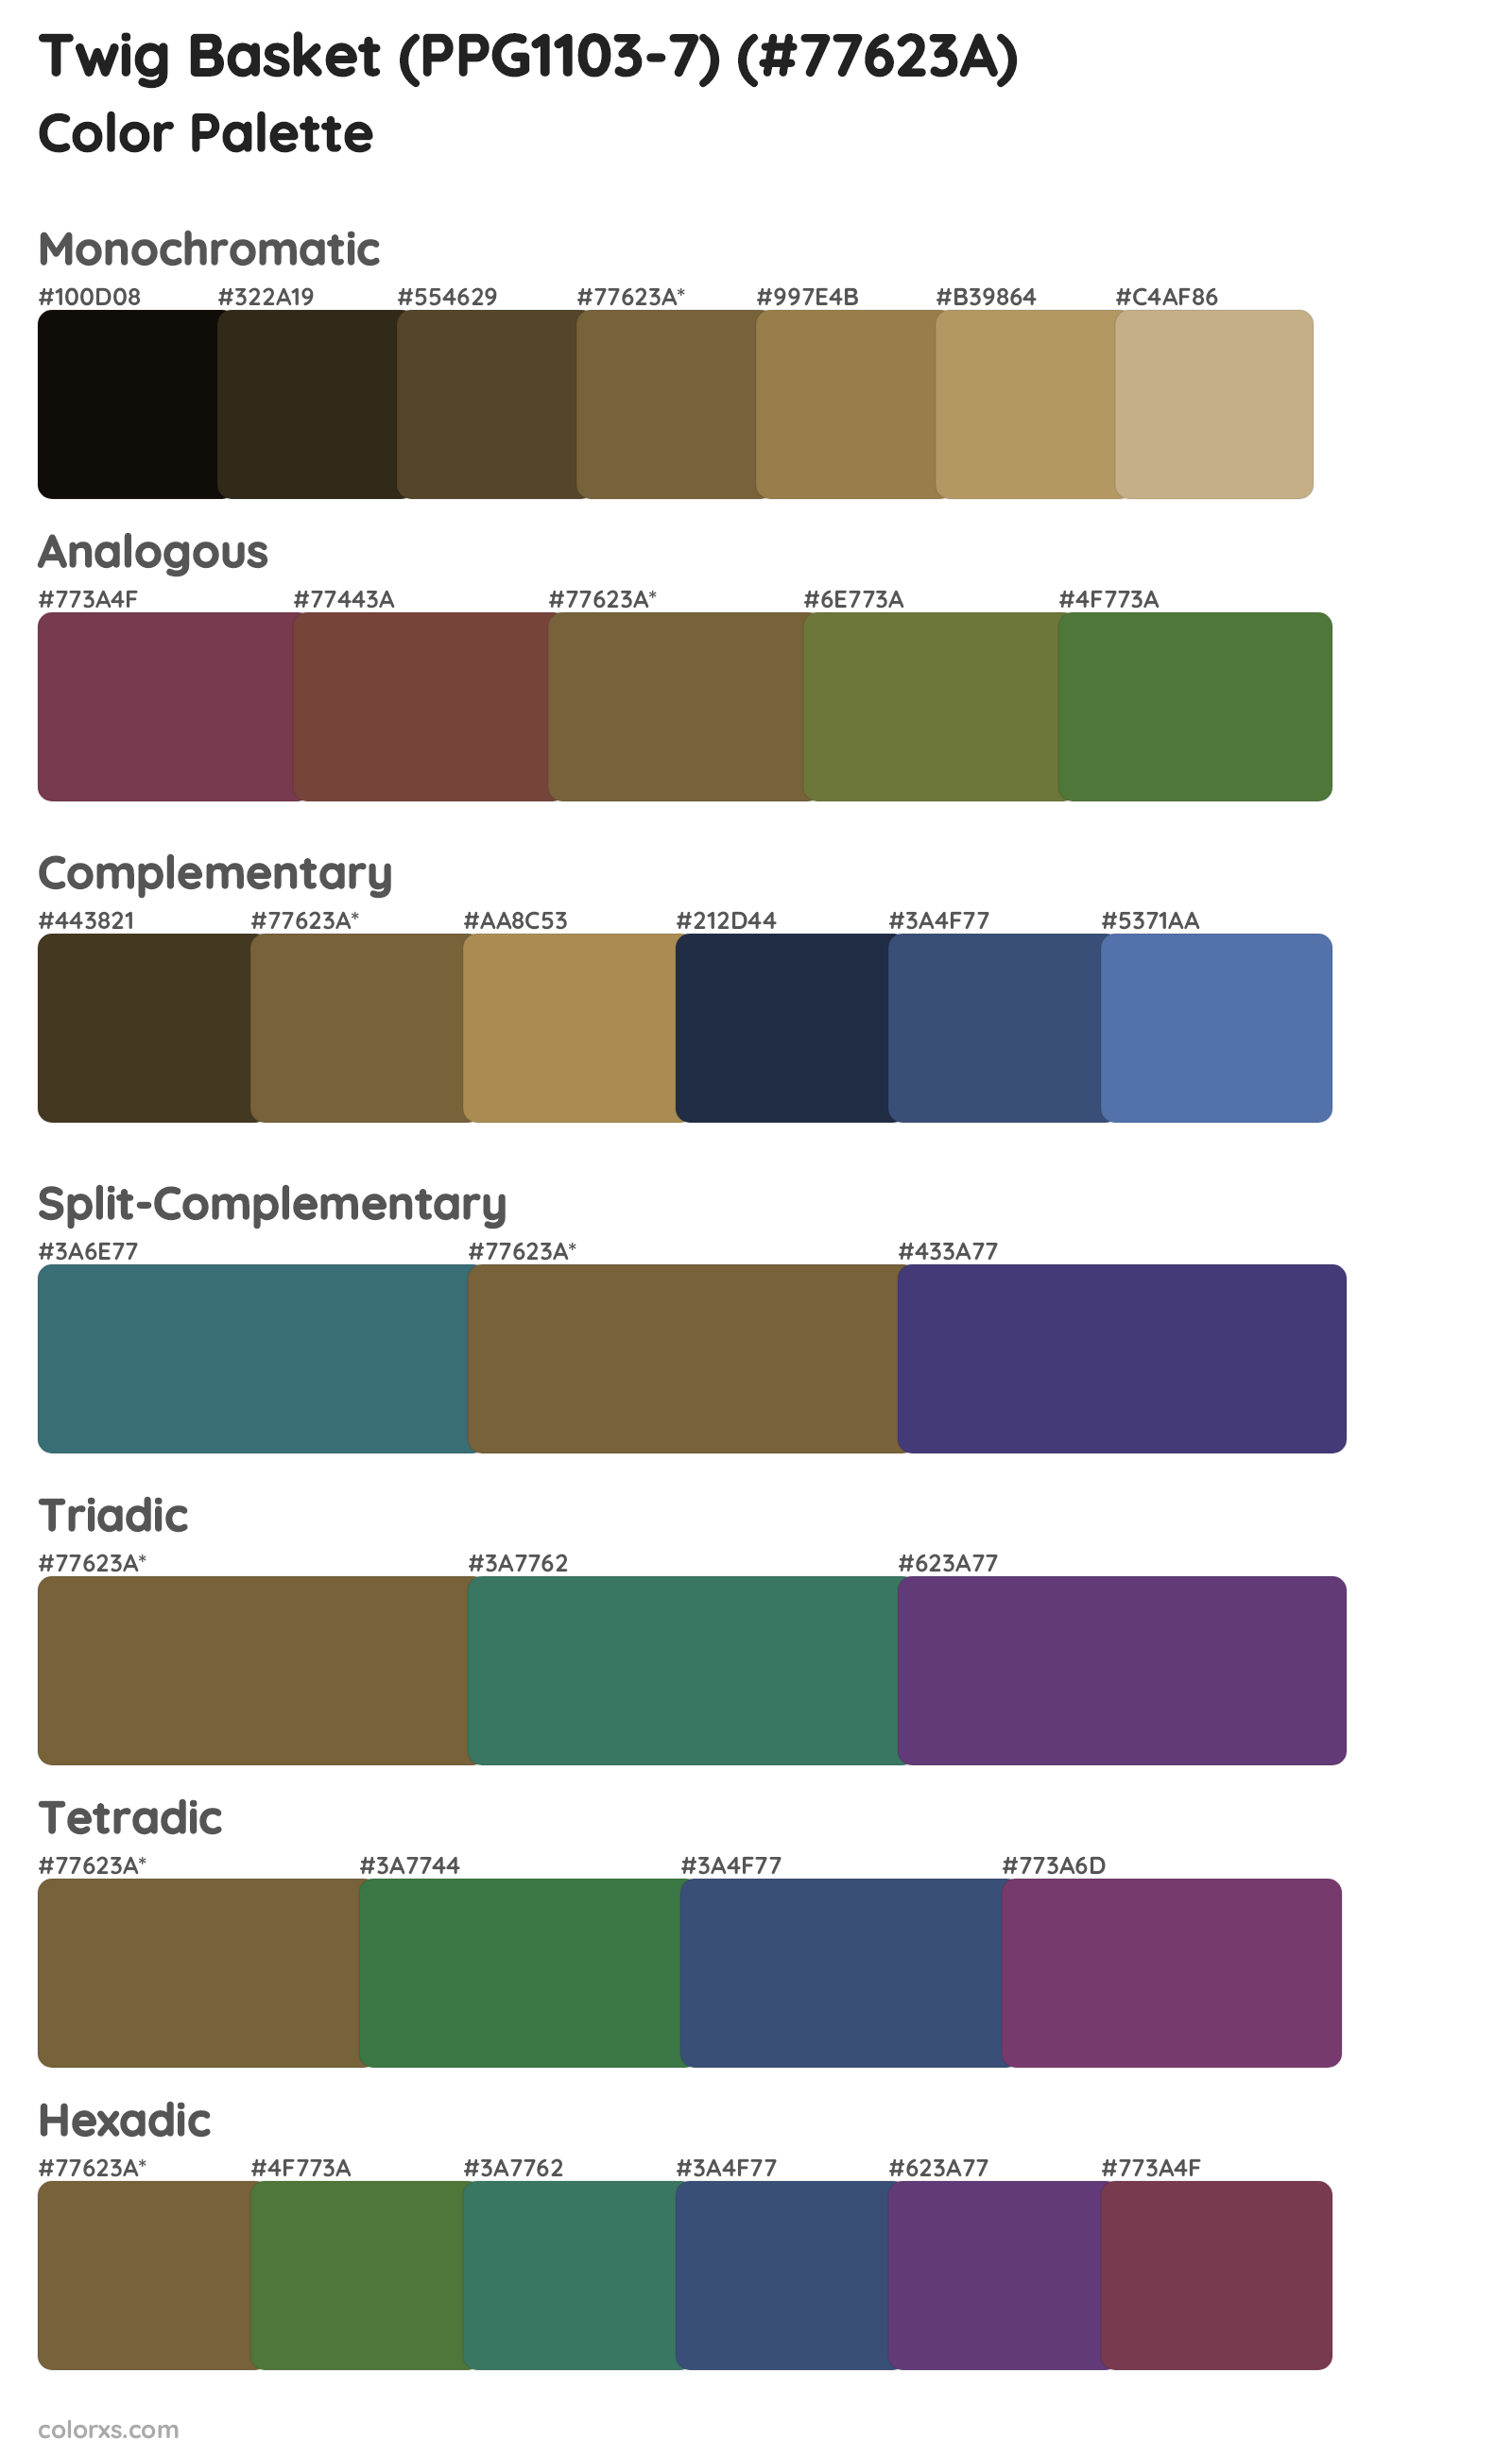 Twig Basket (PPG1103-7) Color Scheme Palettes